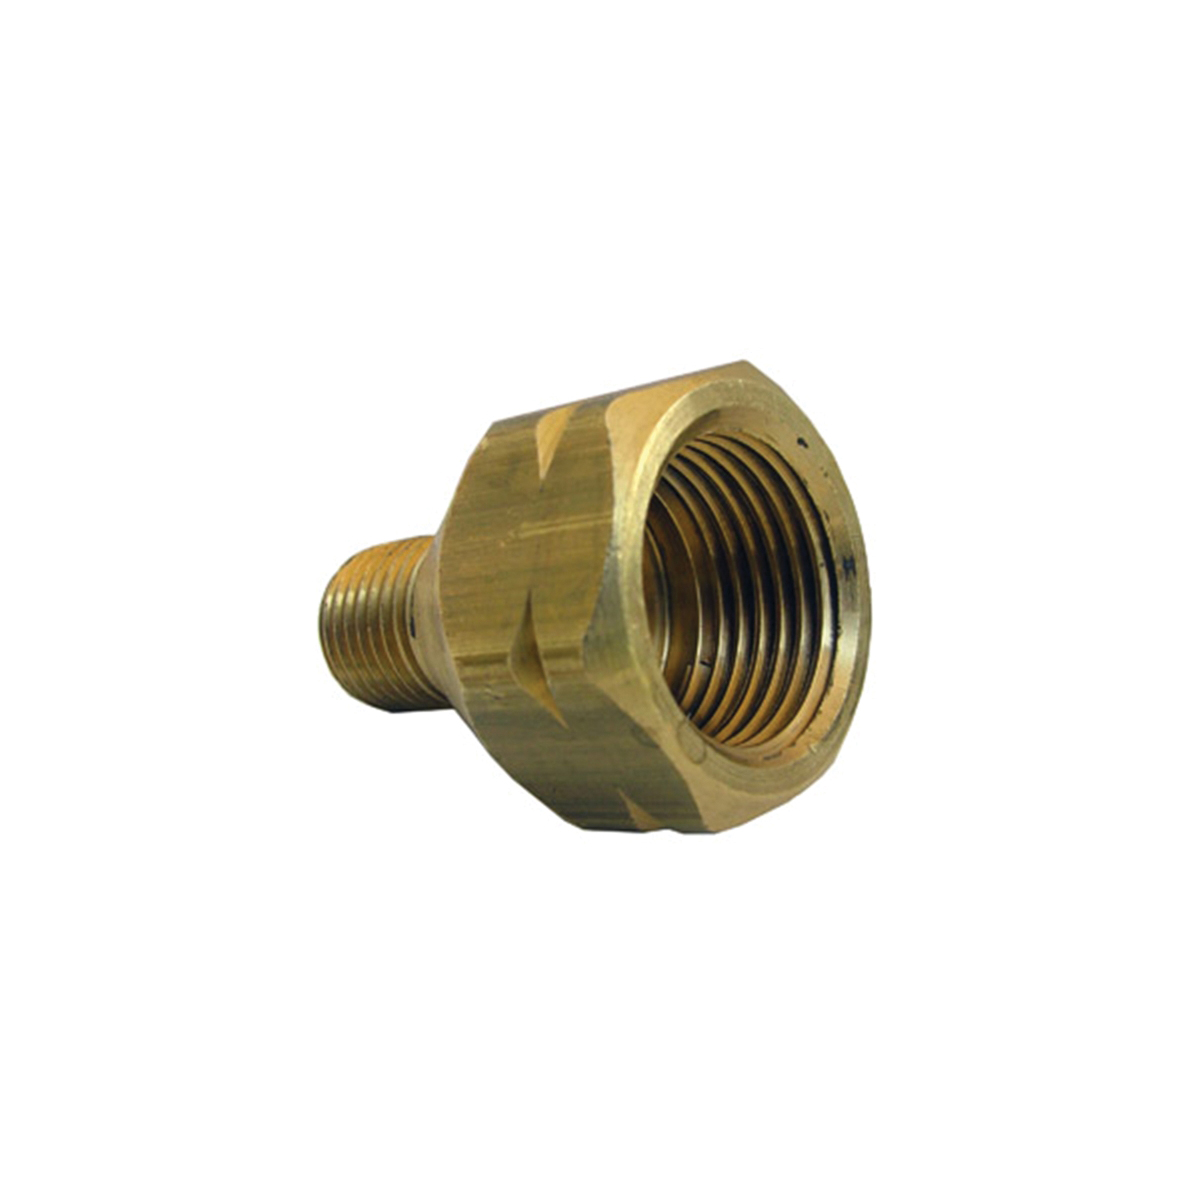 Lasco 17-5341 Gas Adapter, 1/4 in, Female POL x MIP, Brass